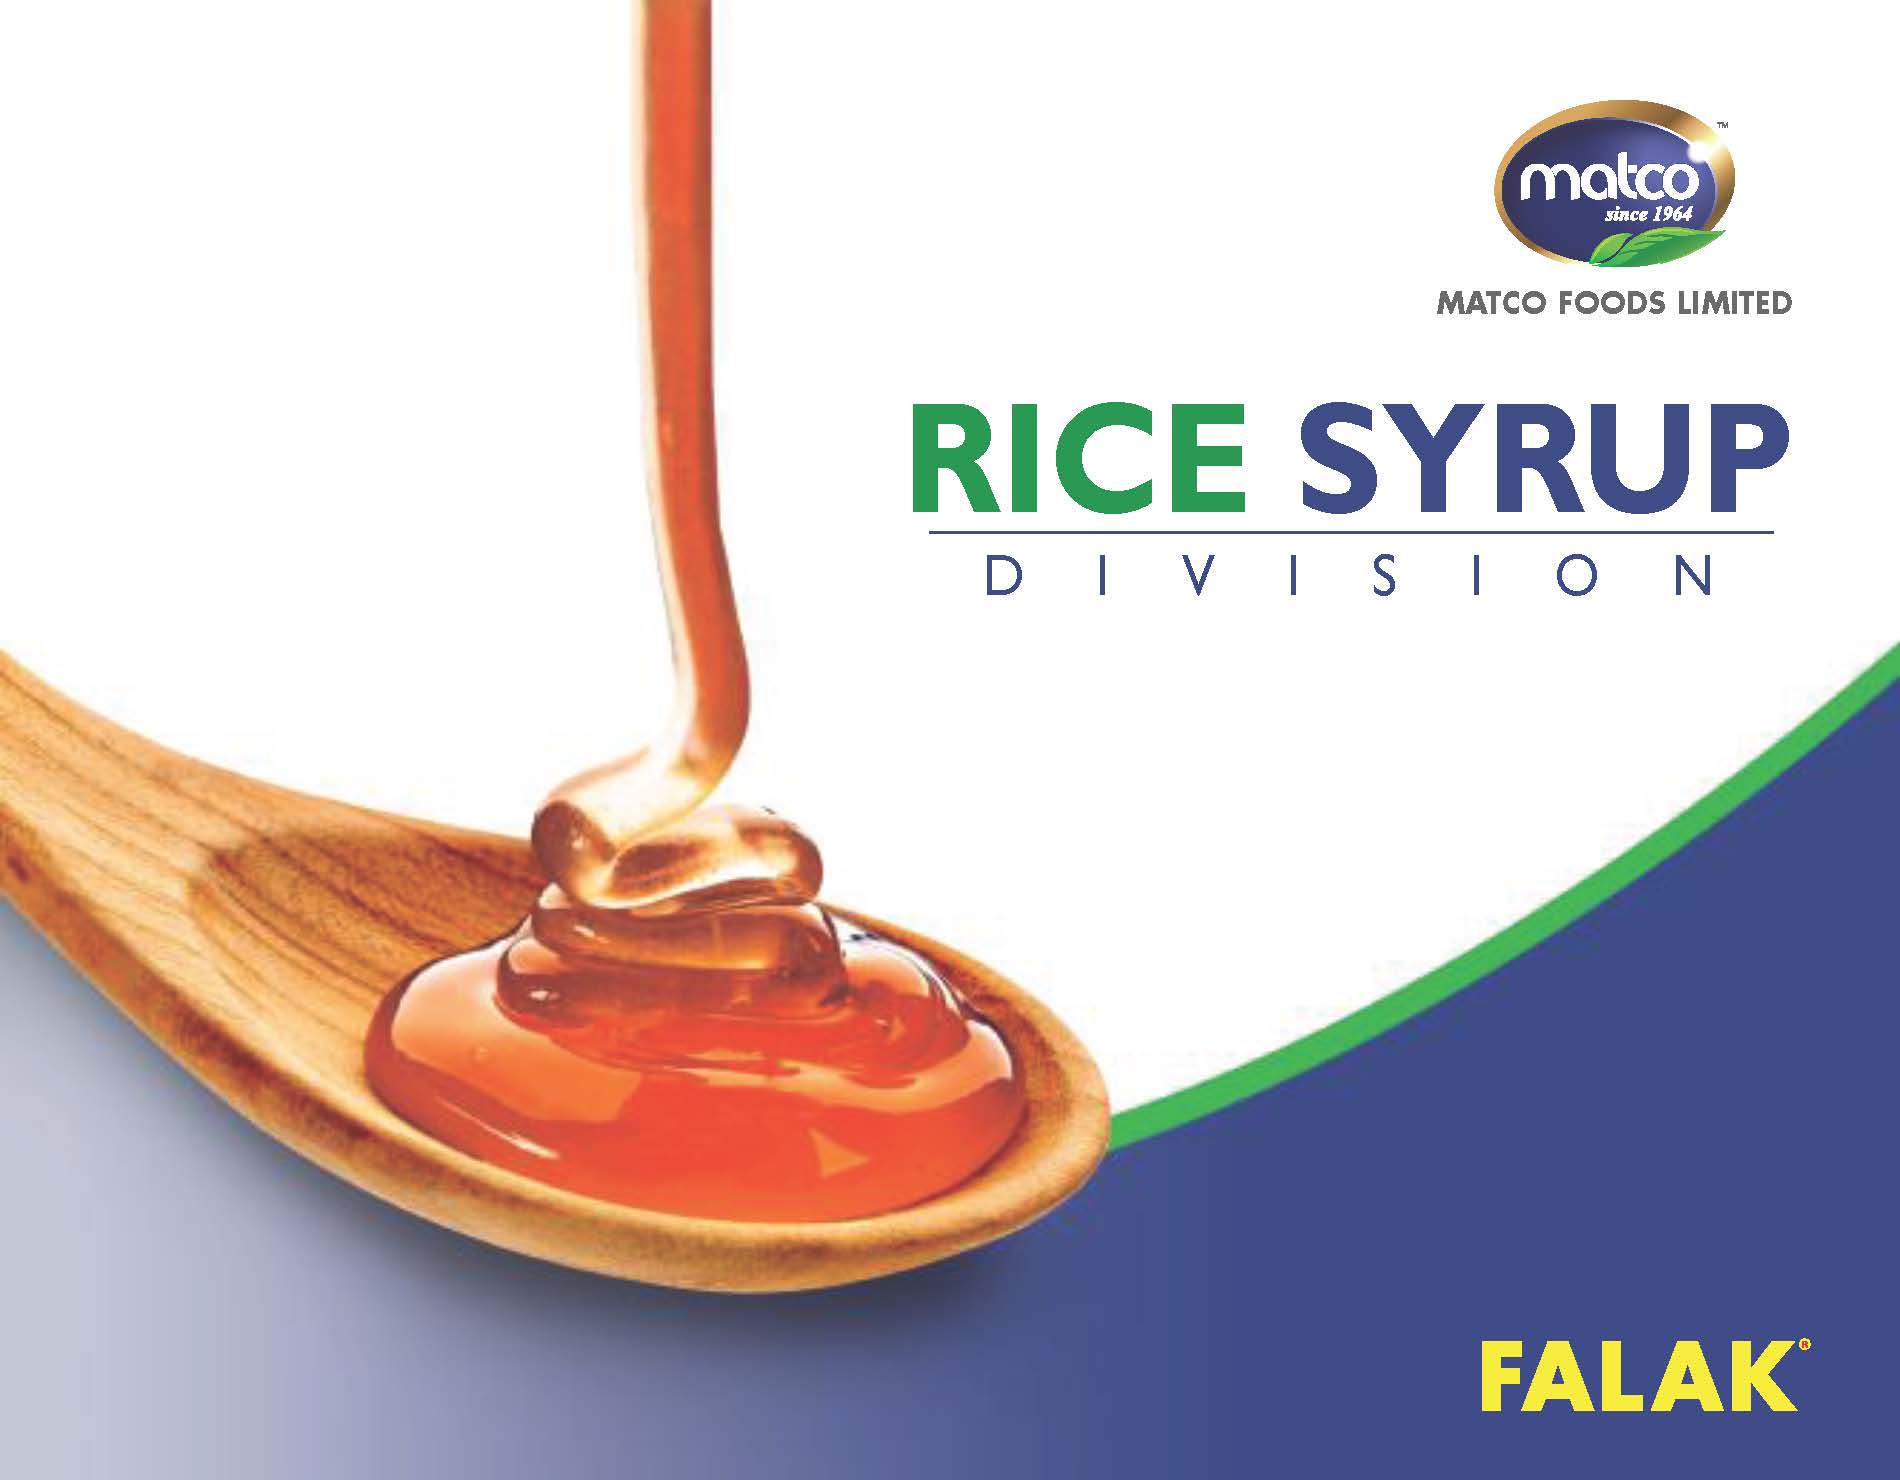 Matco Rice Syrup Brochure